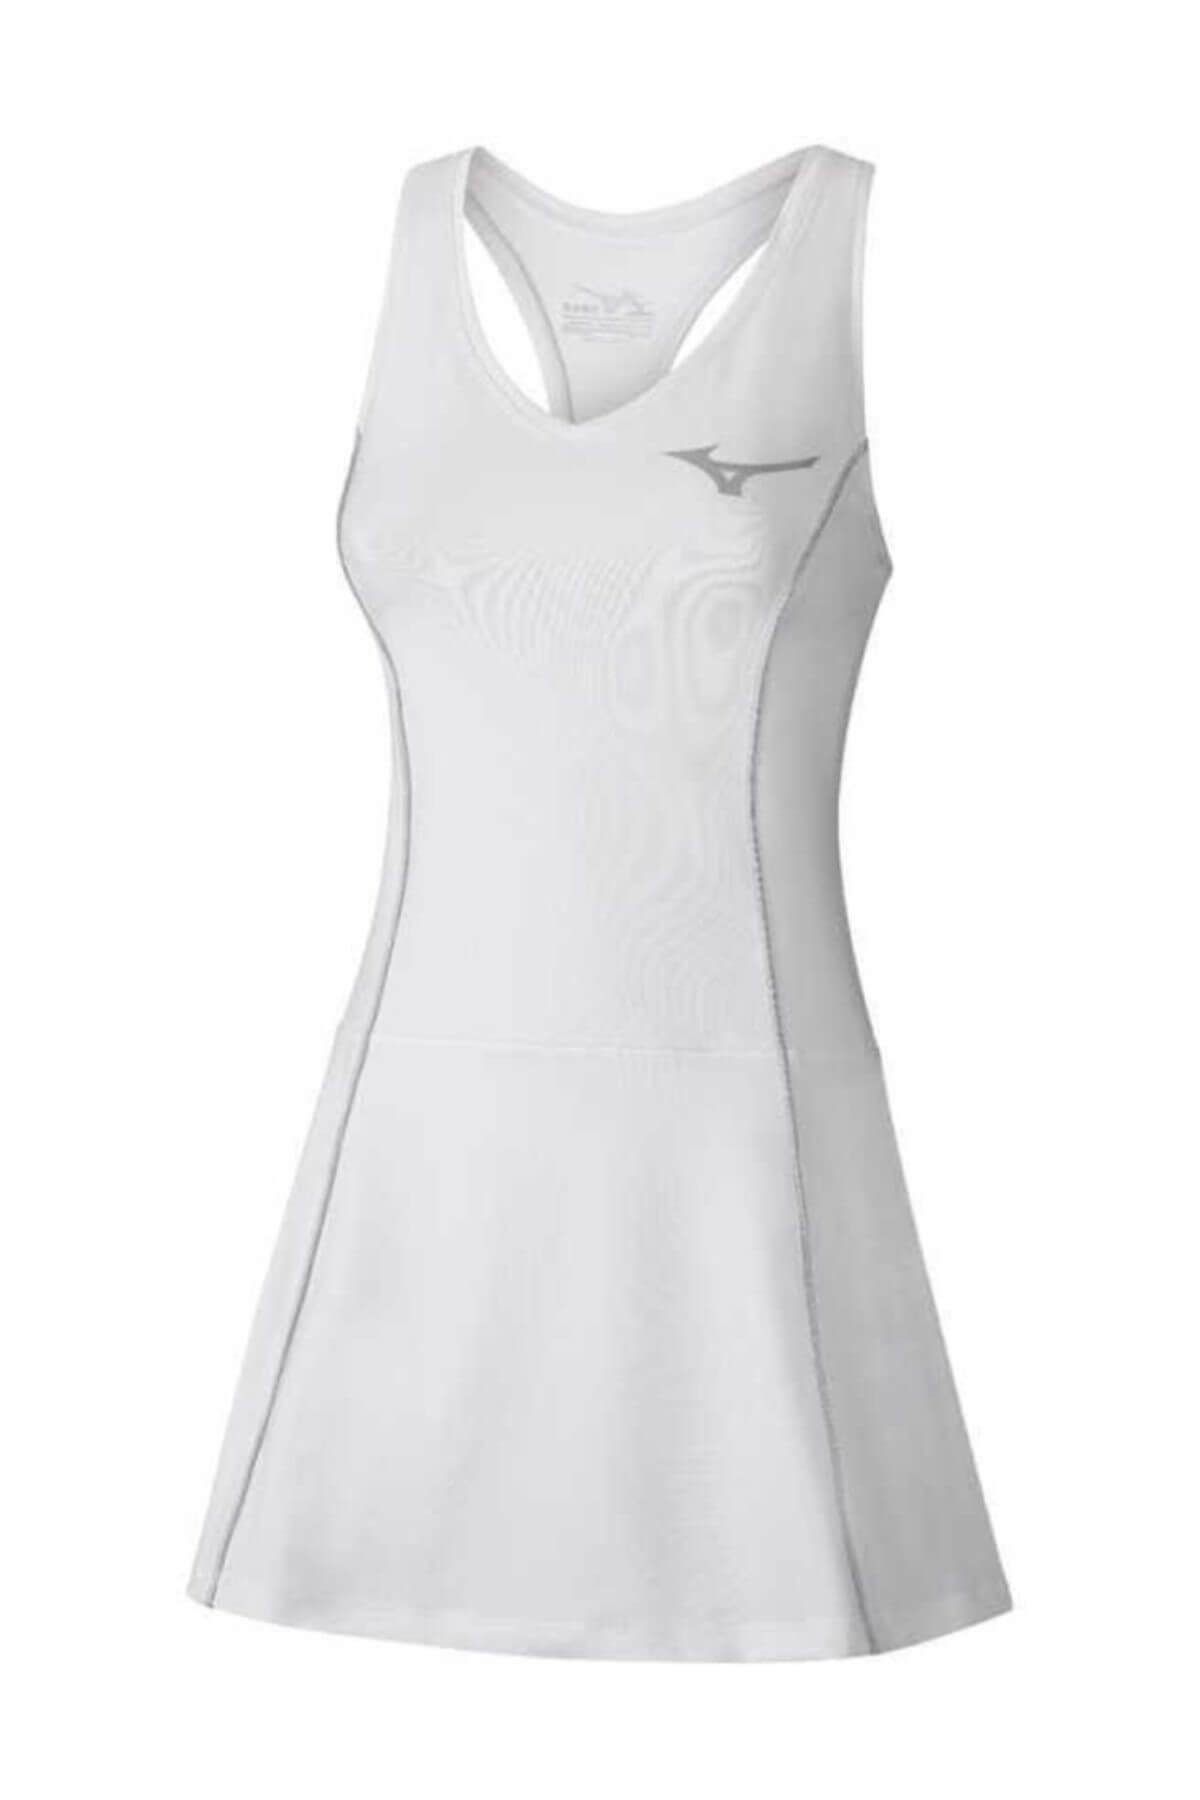 Mizuno Kadın Tenis Kıyafeti  - Amplify Dress - K2GH820101